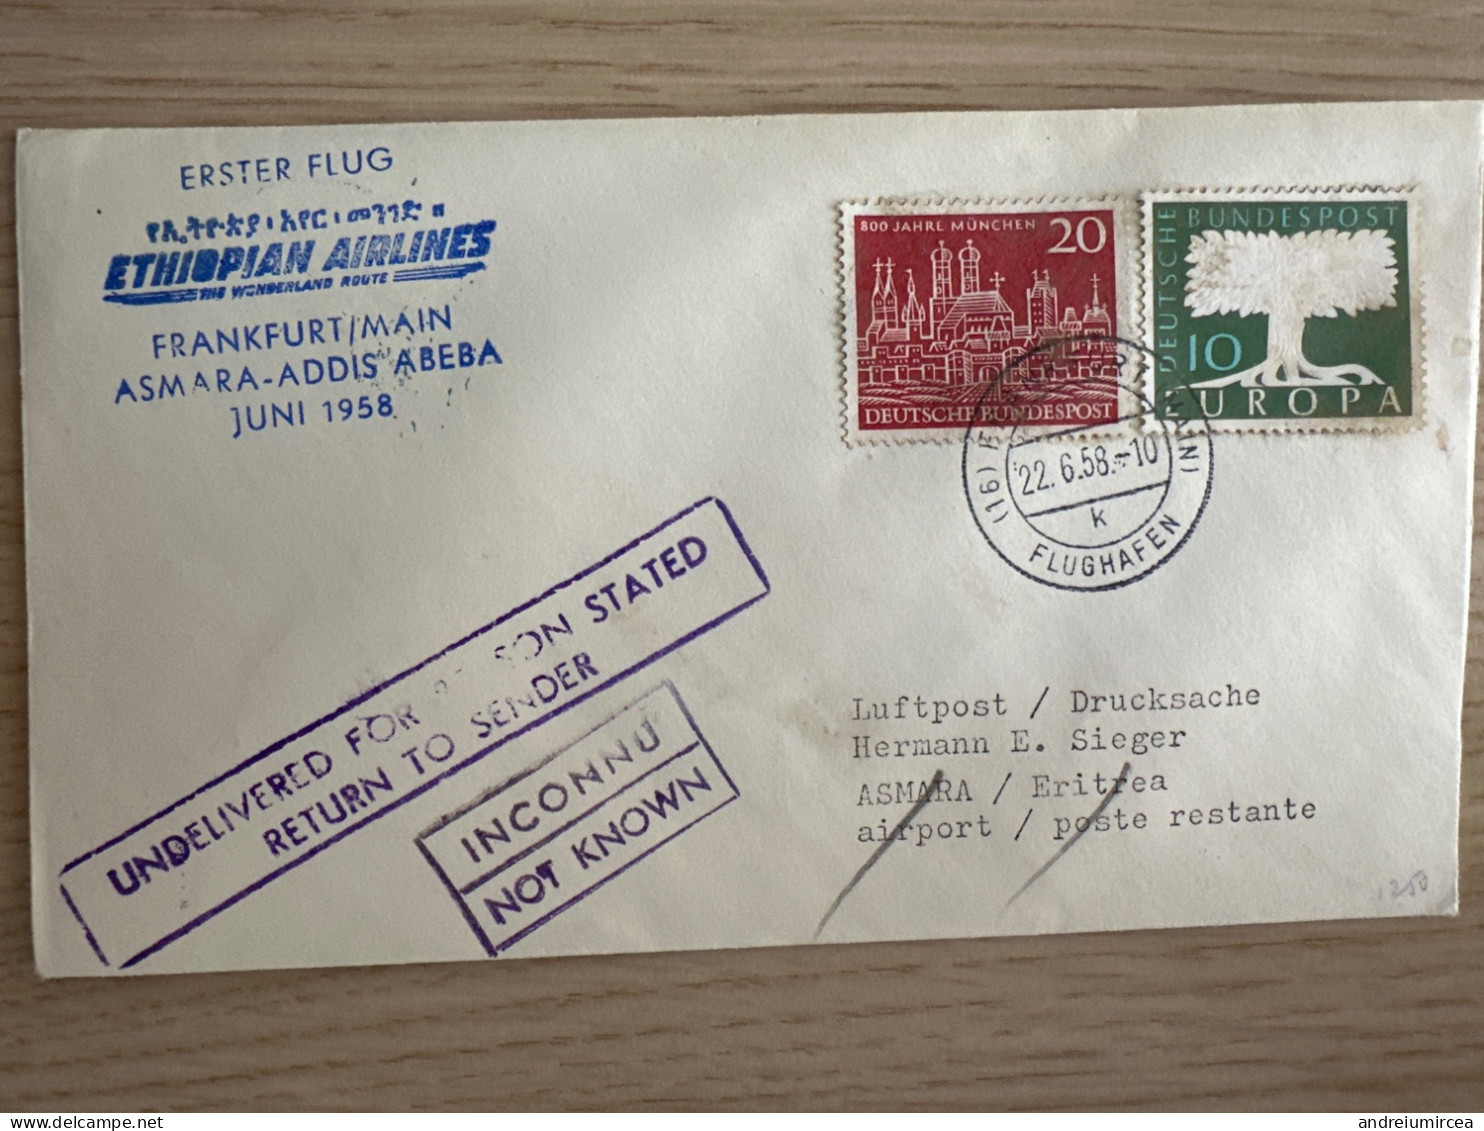 1958 Erster Flug ETHIOPIAN AIRLINES Frankfurt -Addis Abeba - Primi Voli